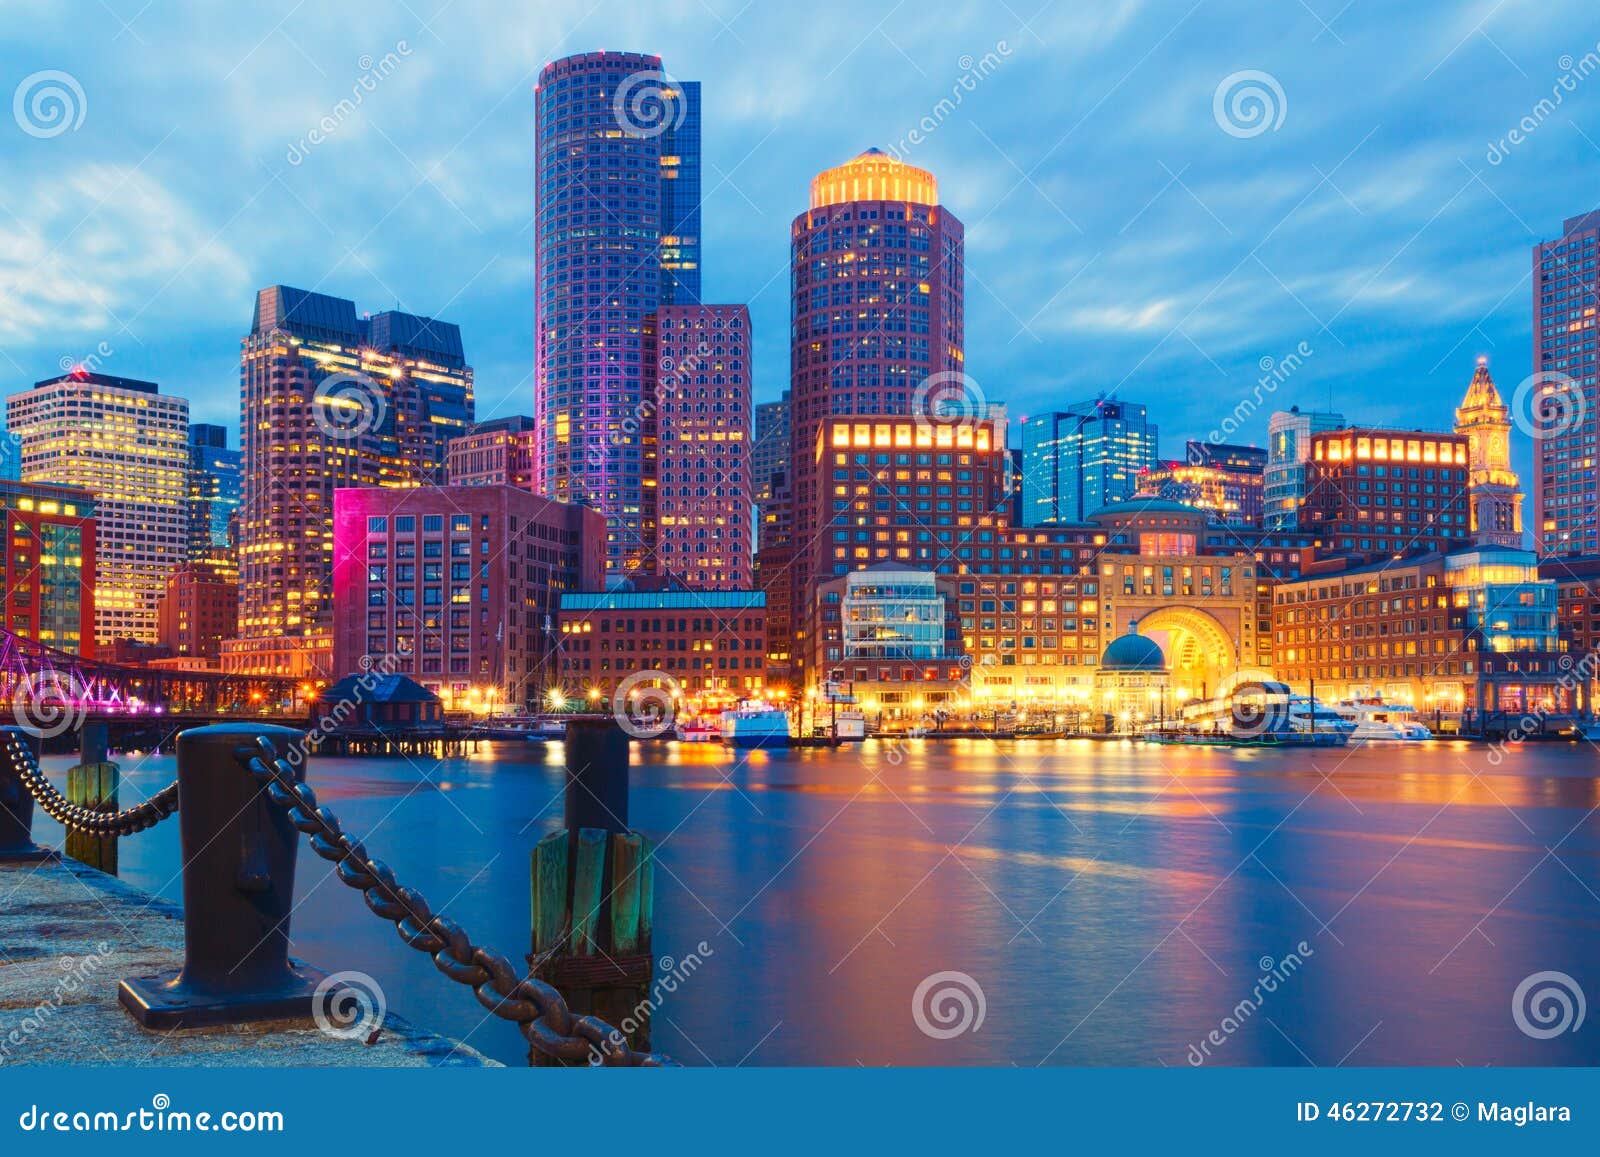 boston harbor and financial district at sunset. boston, massachusetts, usa